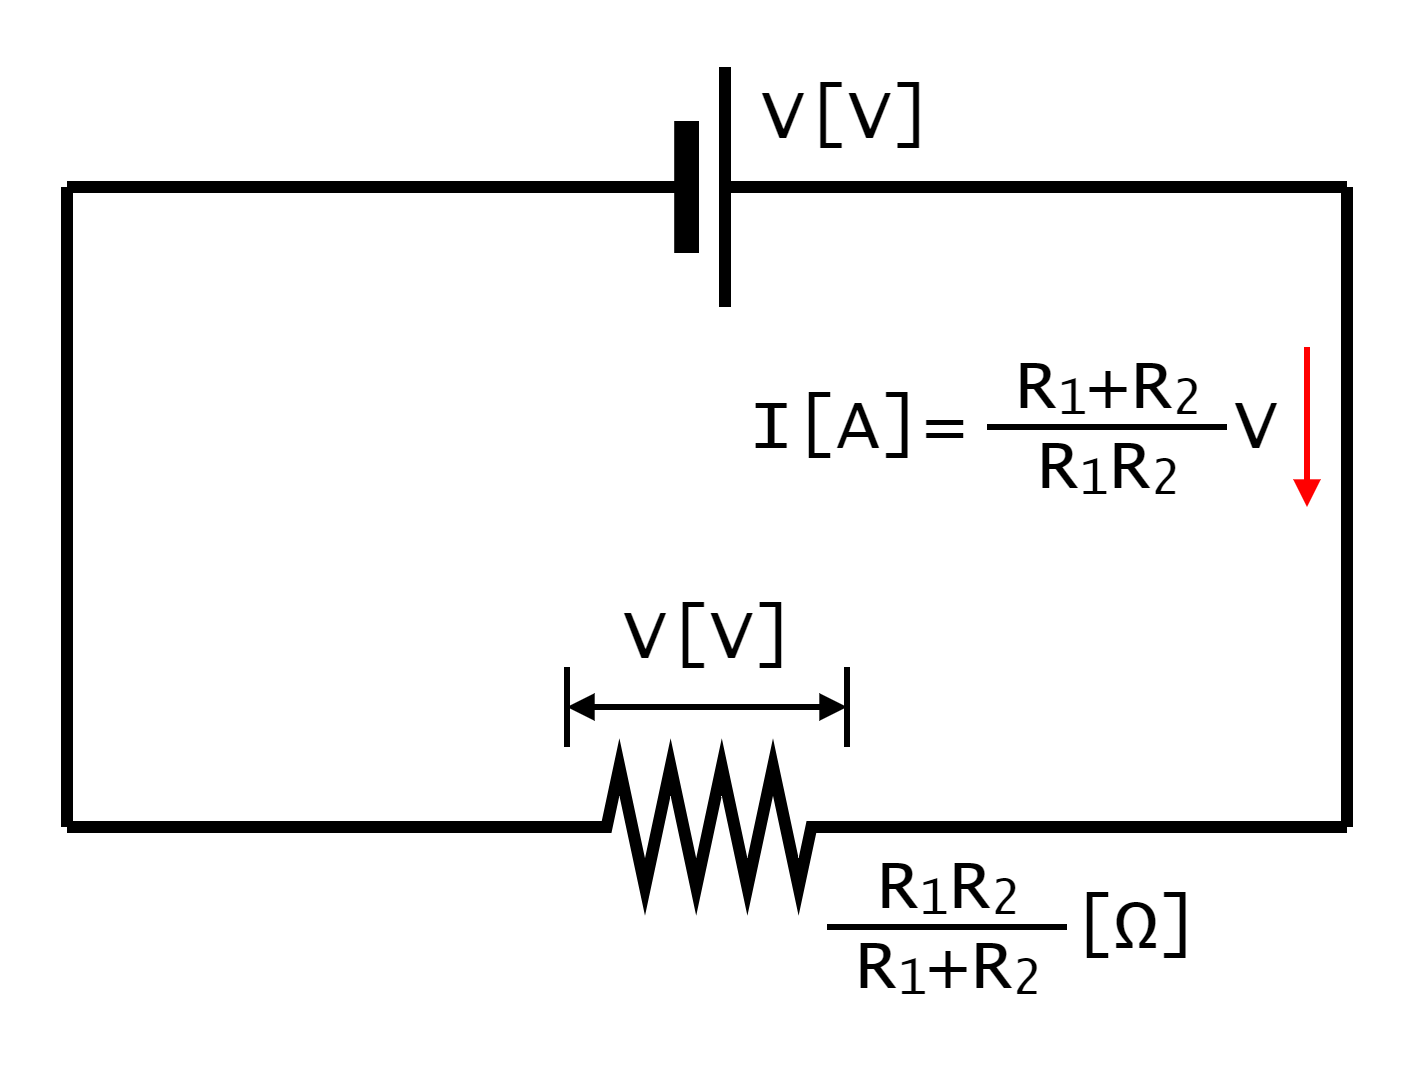 図1-5-2-1.合成抵抗と電流